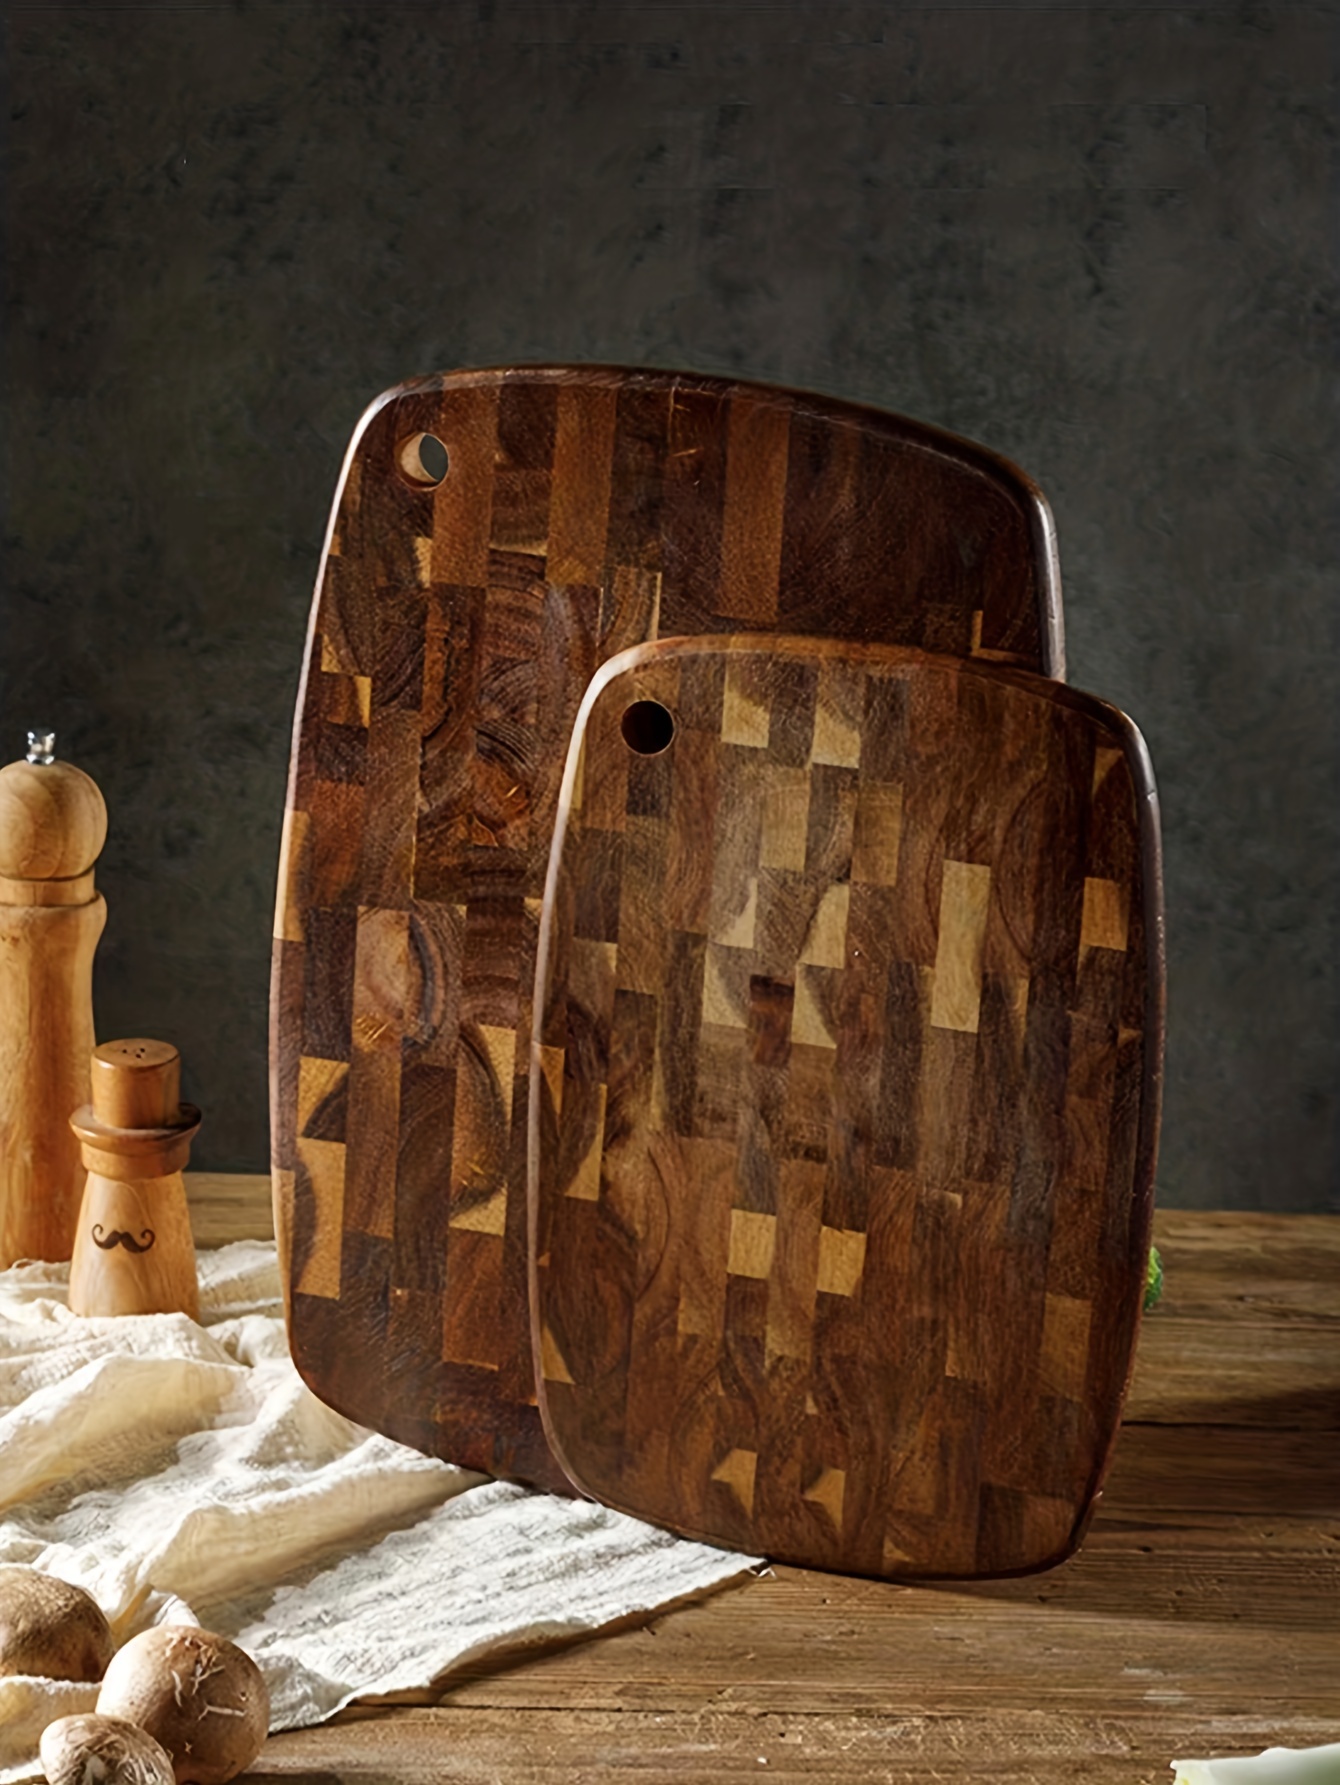 Gourmet Cutting Board, Acacia Wood Cutting Board